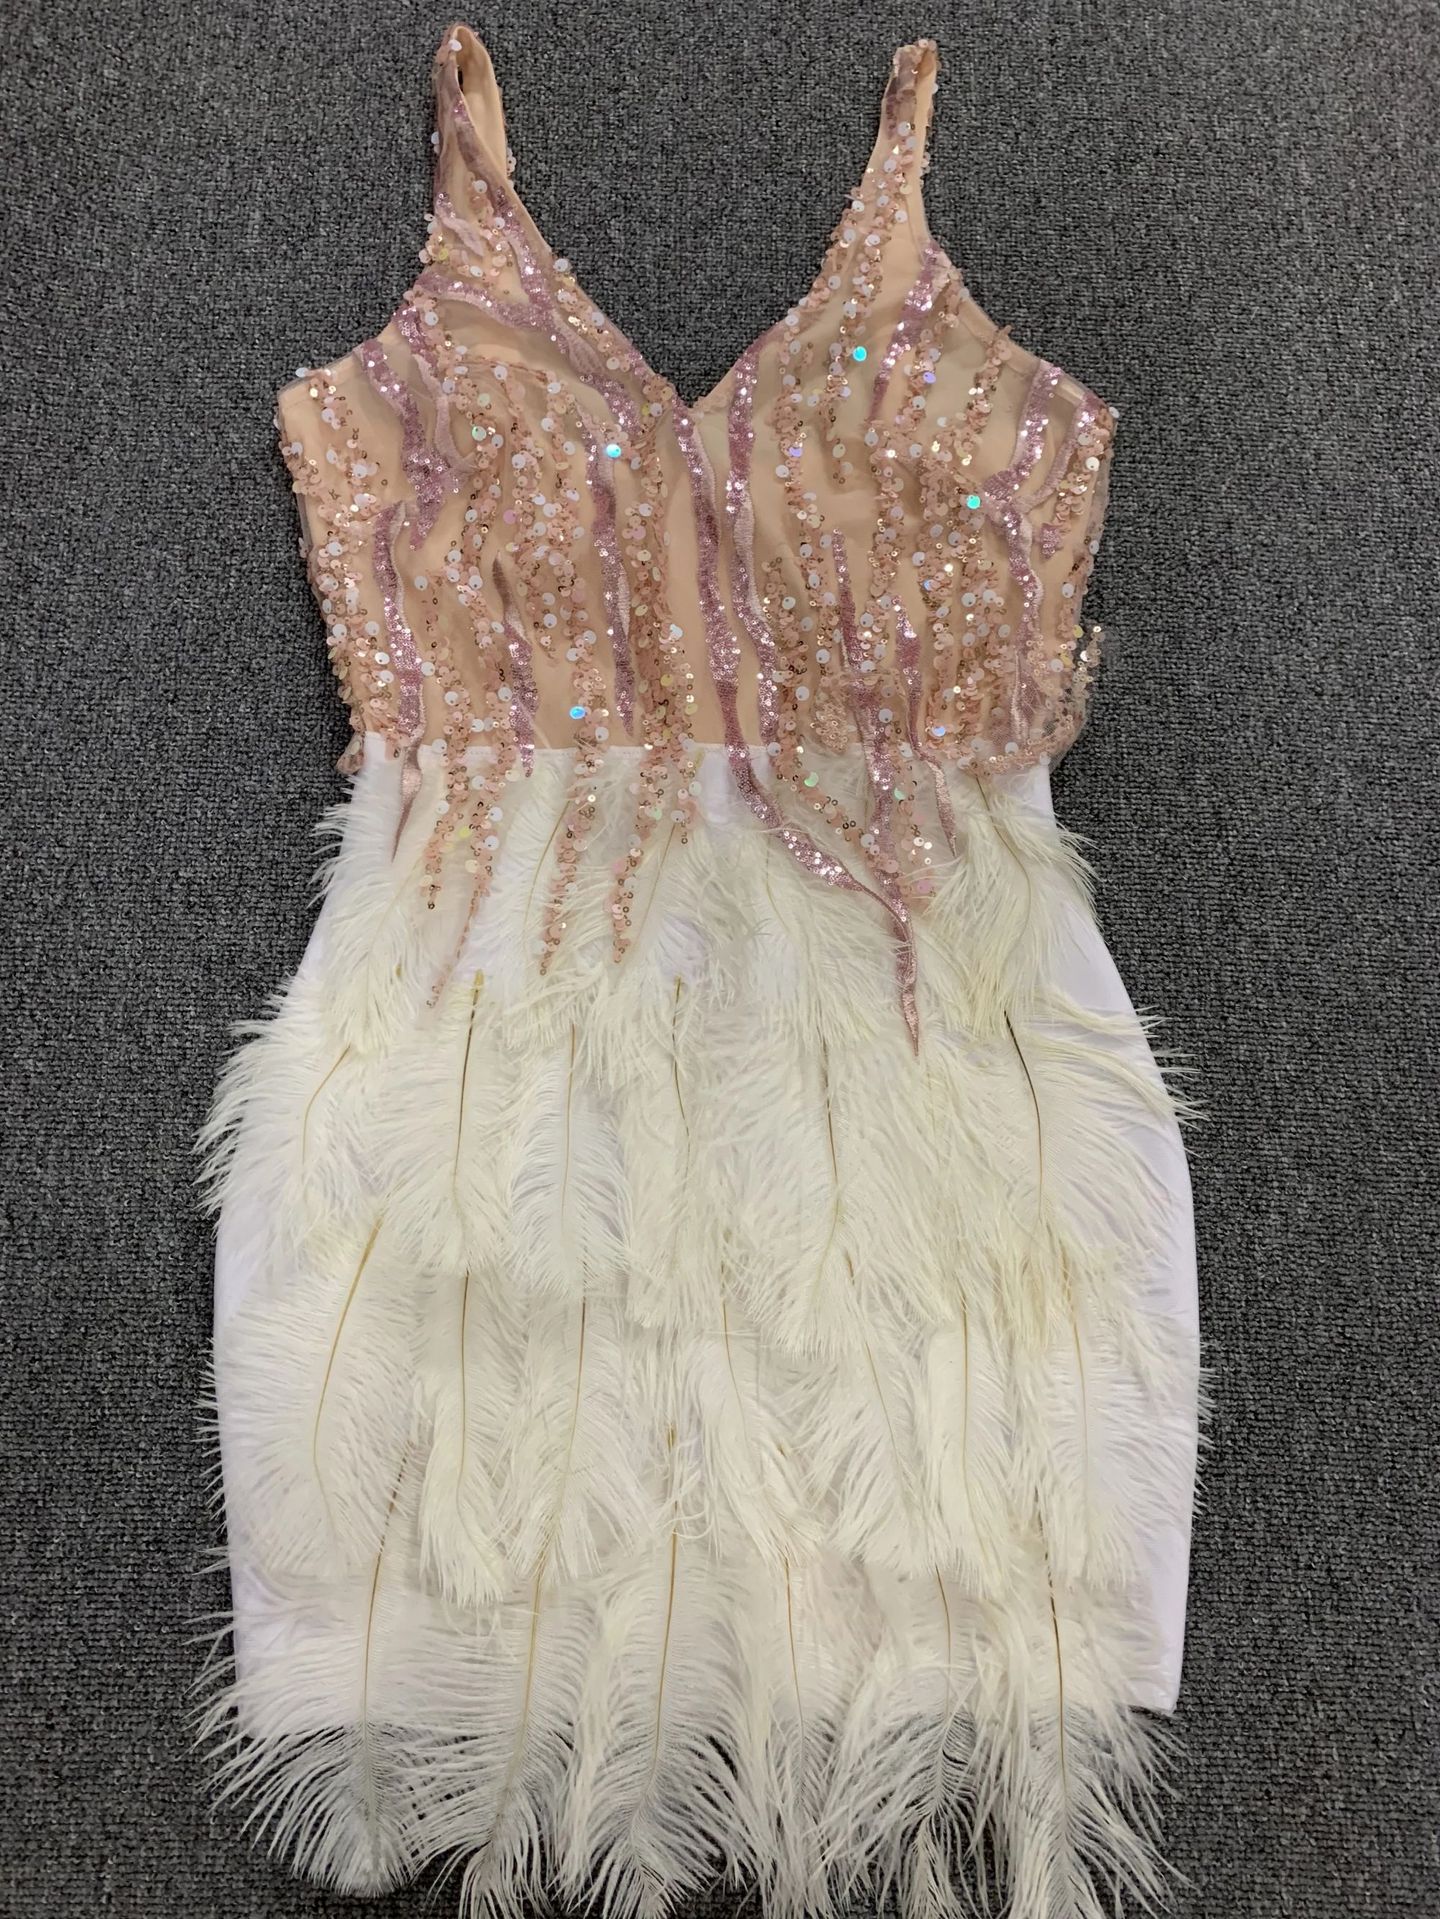 2022 Feathers Rayon Bandage Dress Elegant Night Club Party Sexy Dress Fashion V-Neck Slim Short Dresses For Women Clothes